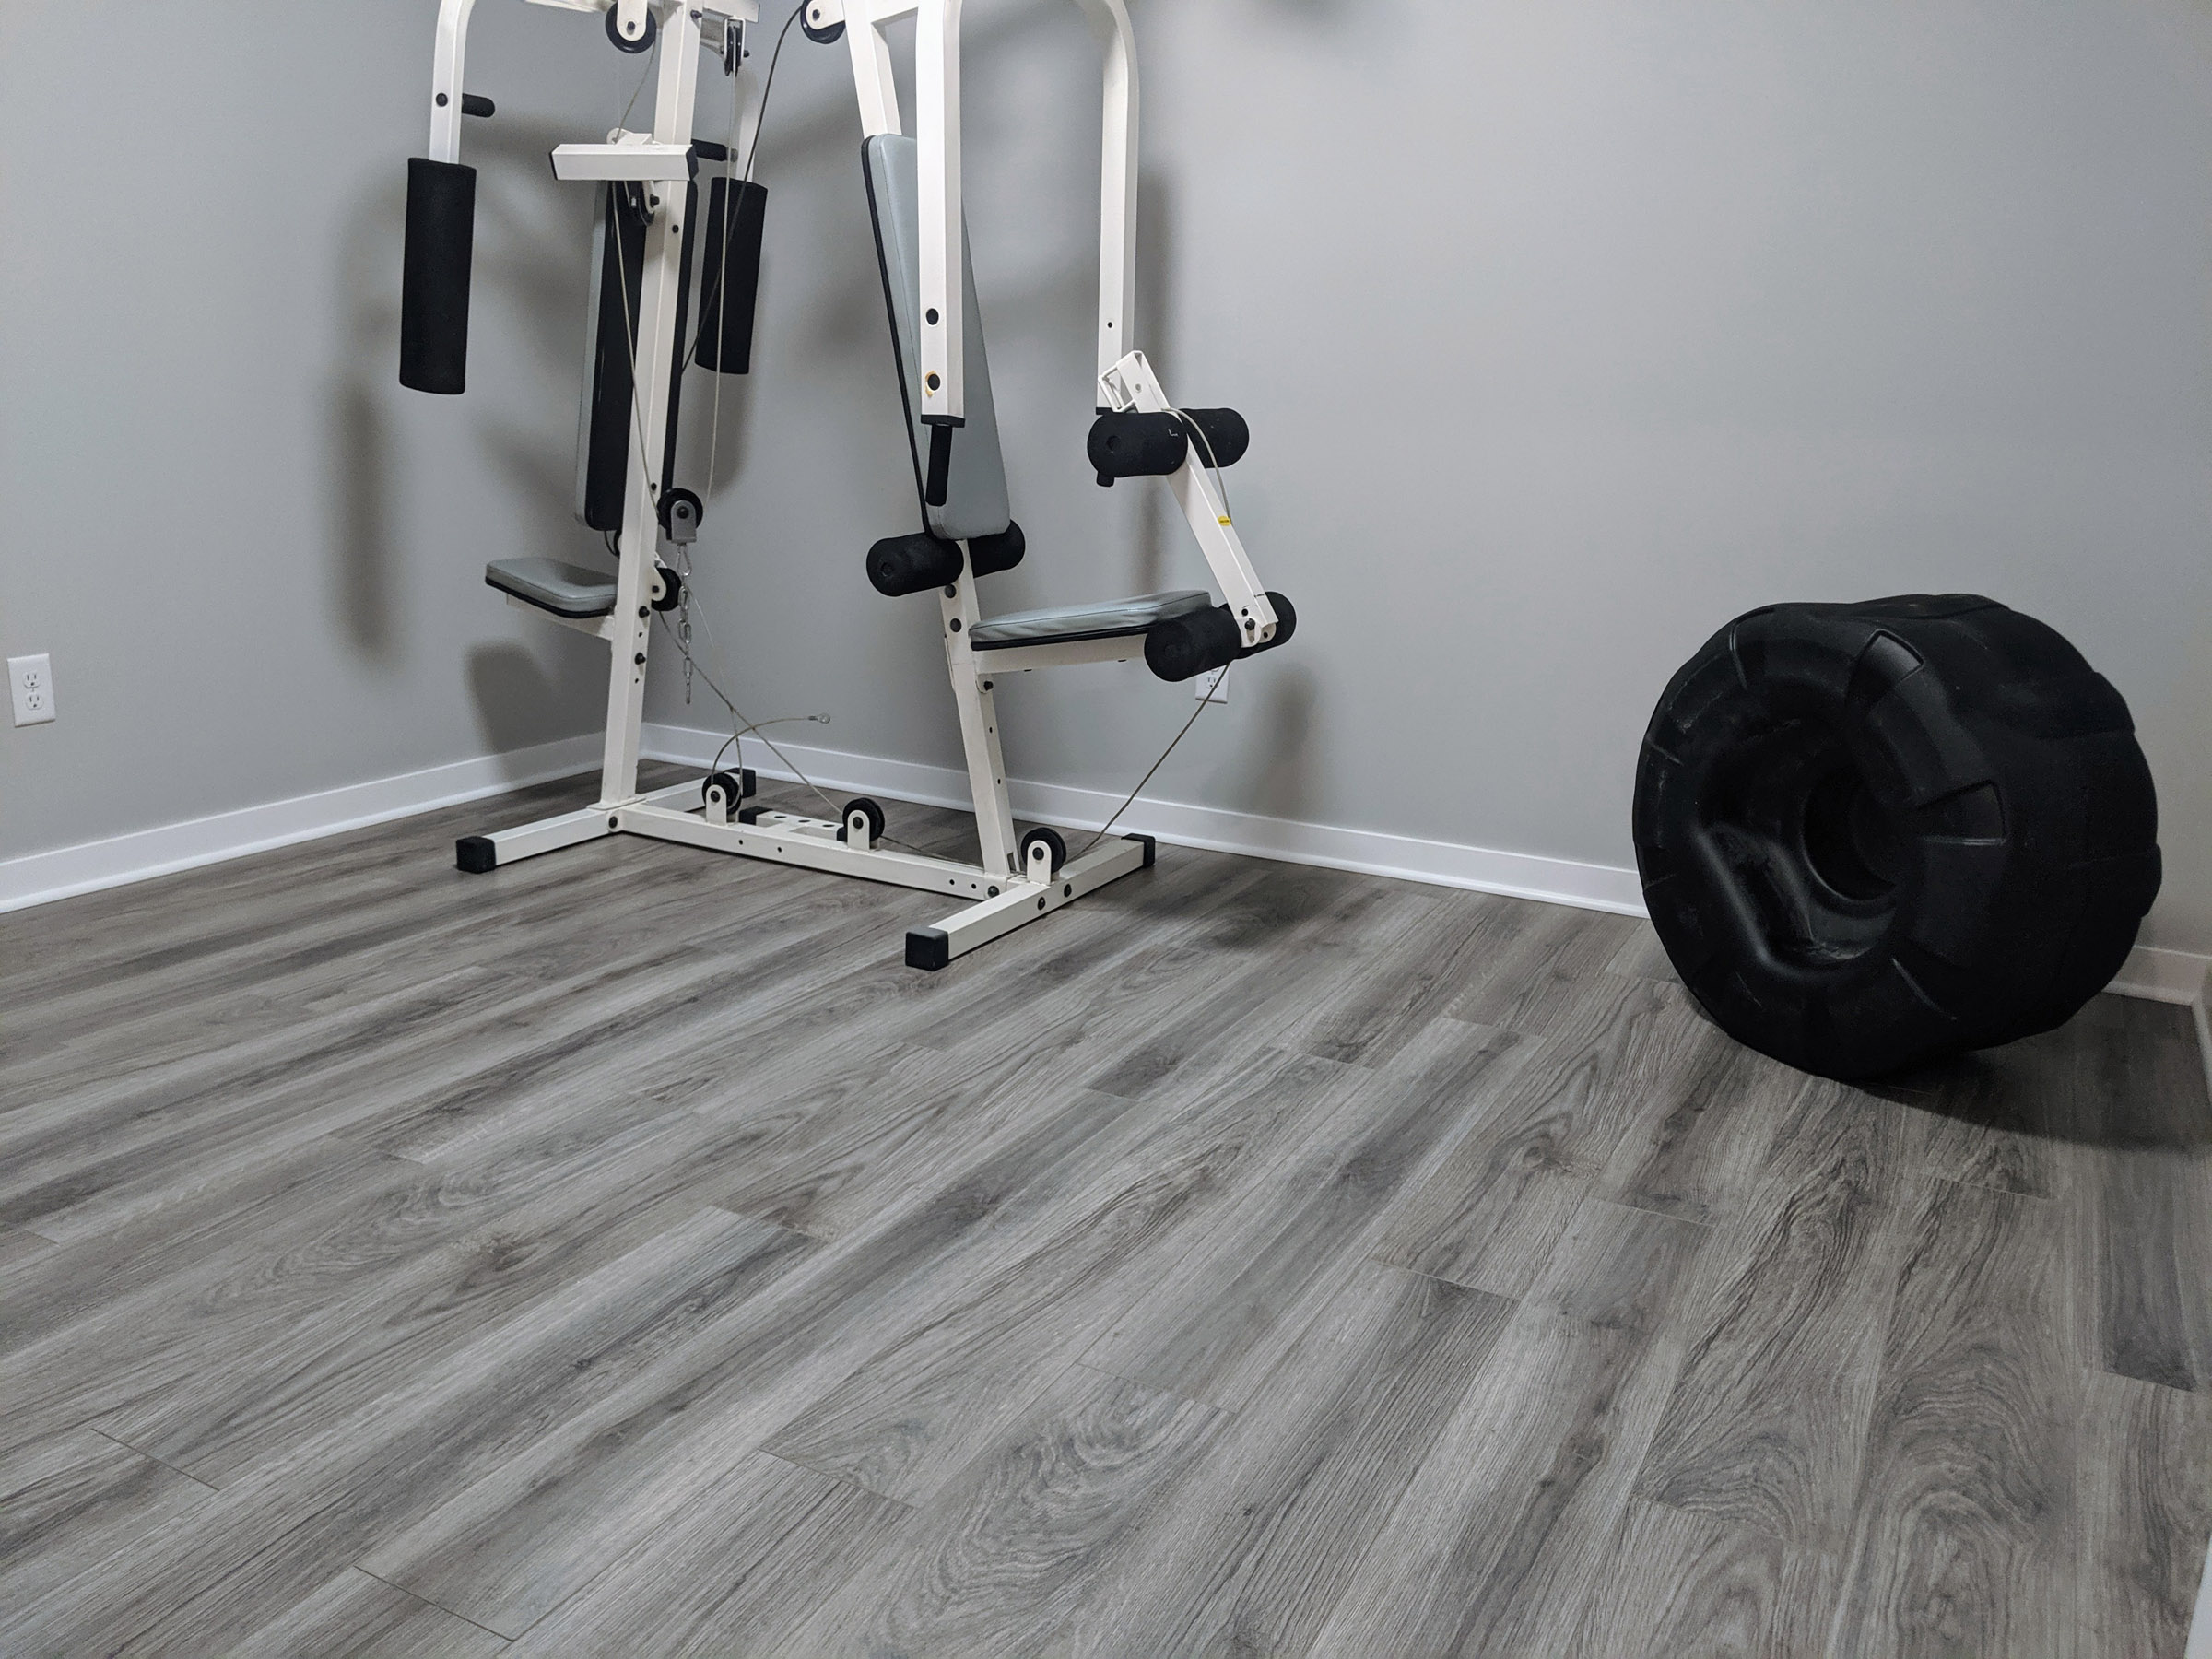 Exercise room has LVP (Luxury Vinyl Plank) flooring